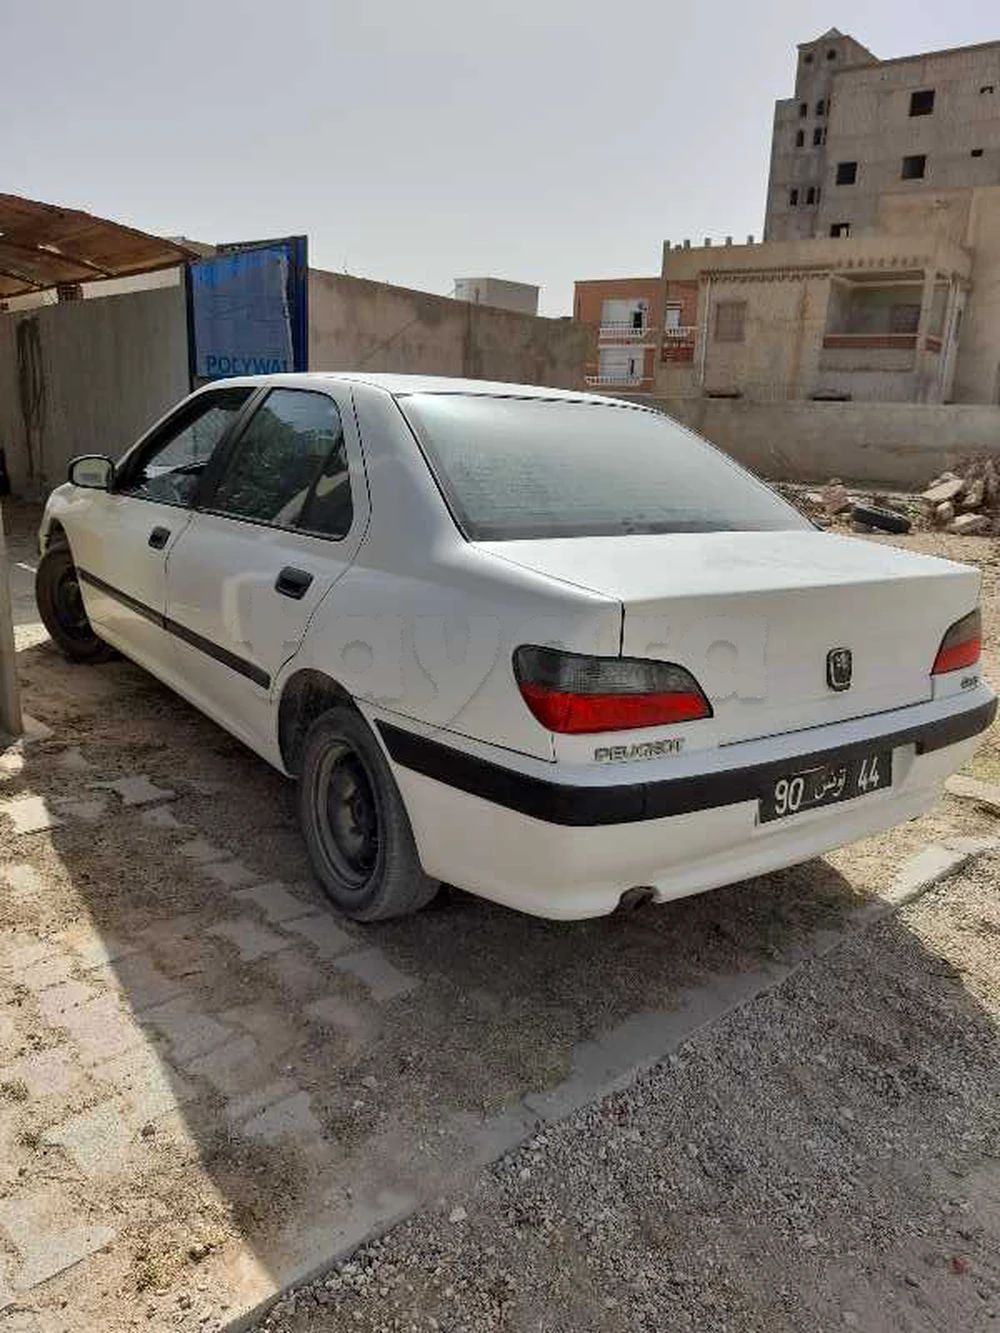 FILTRE A GASOIL 406 - Tunisie   - Pièces Auto Tunisie